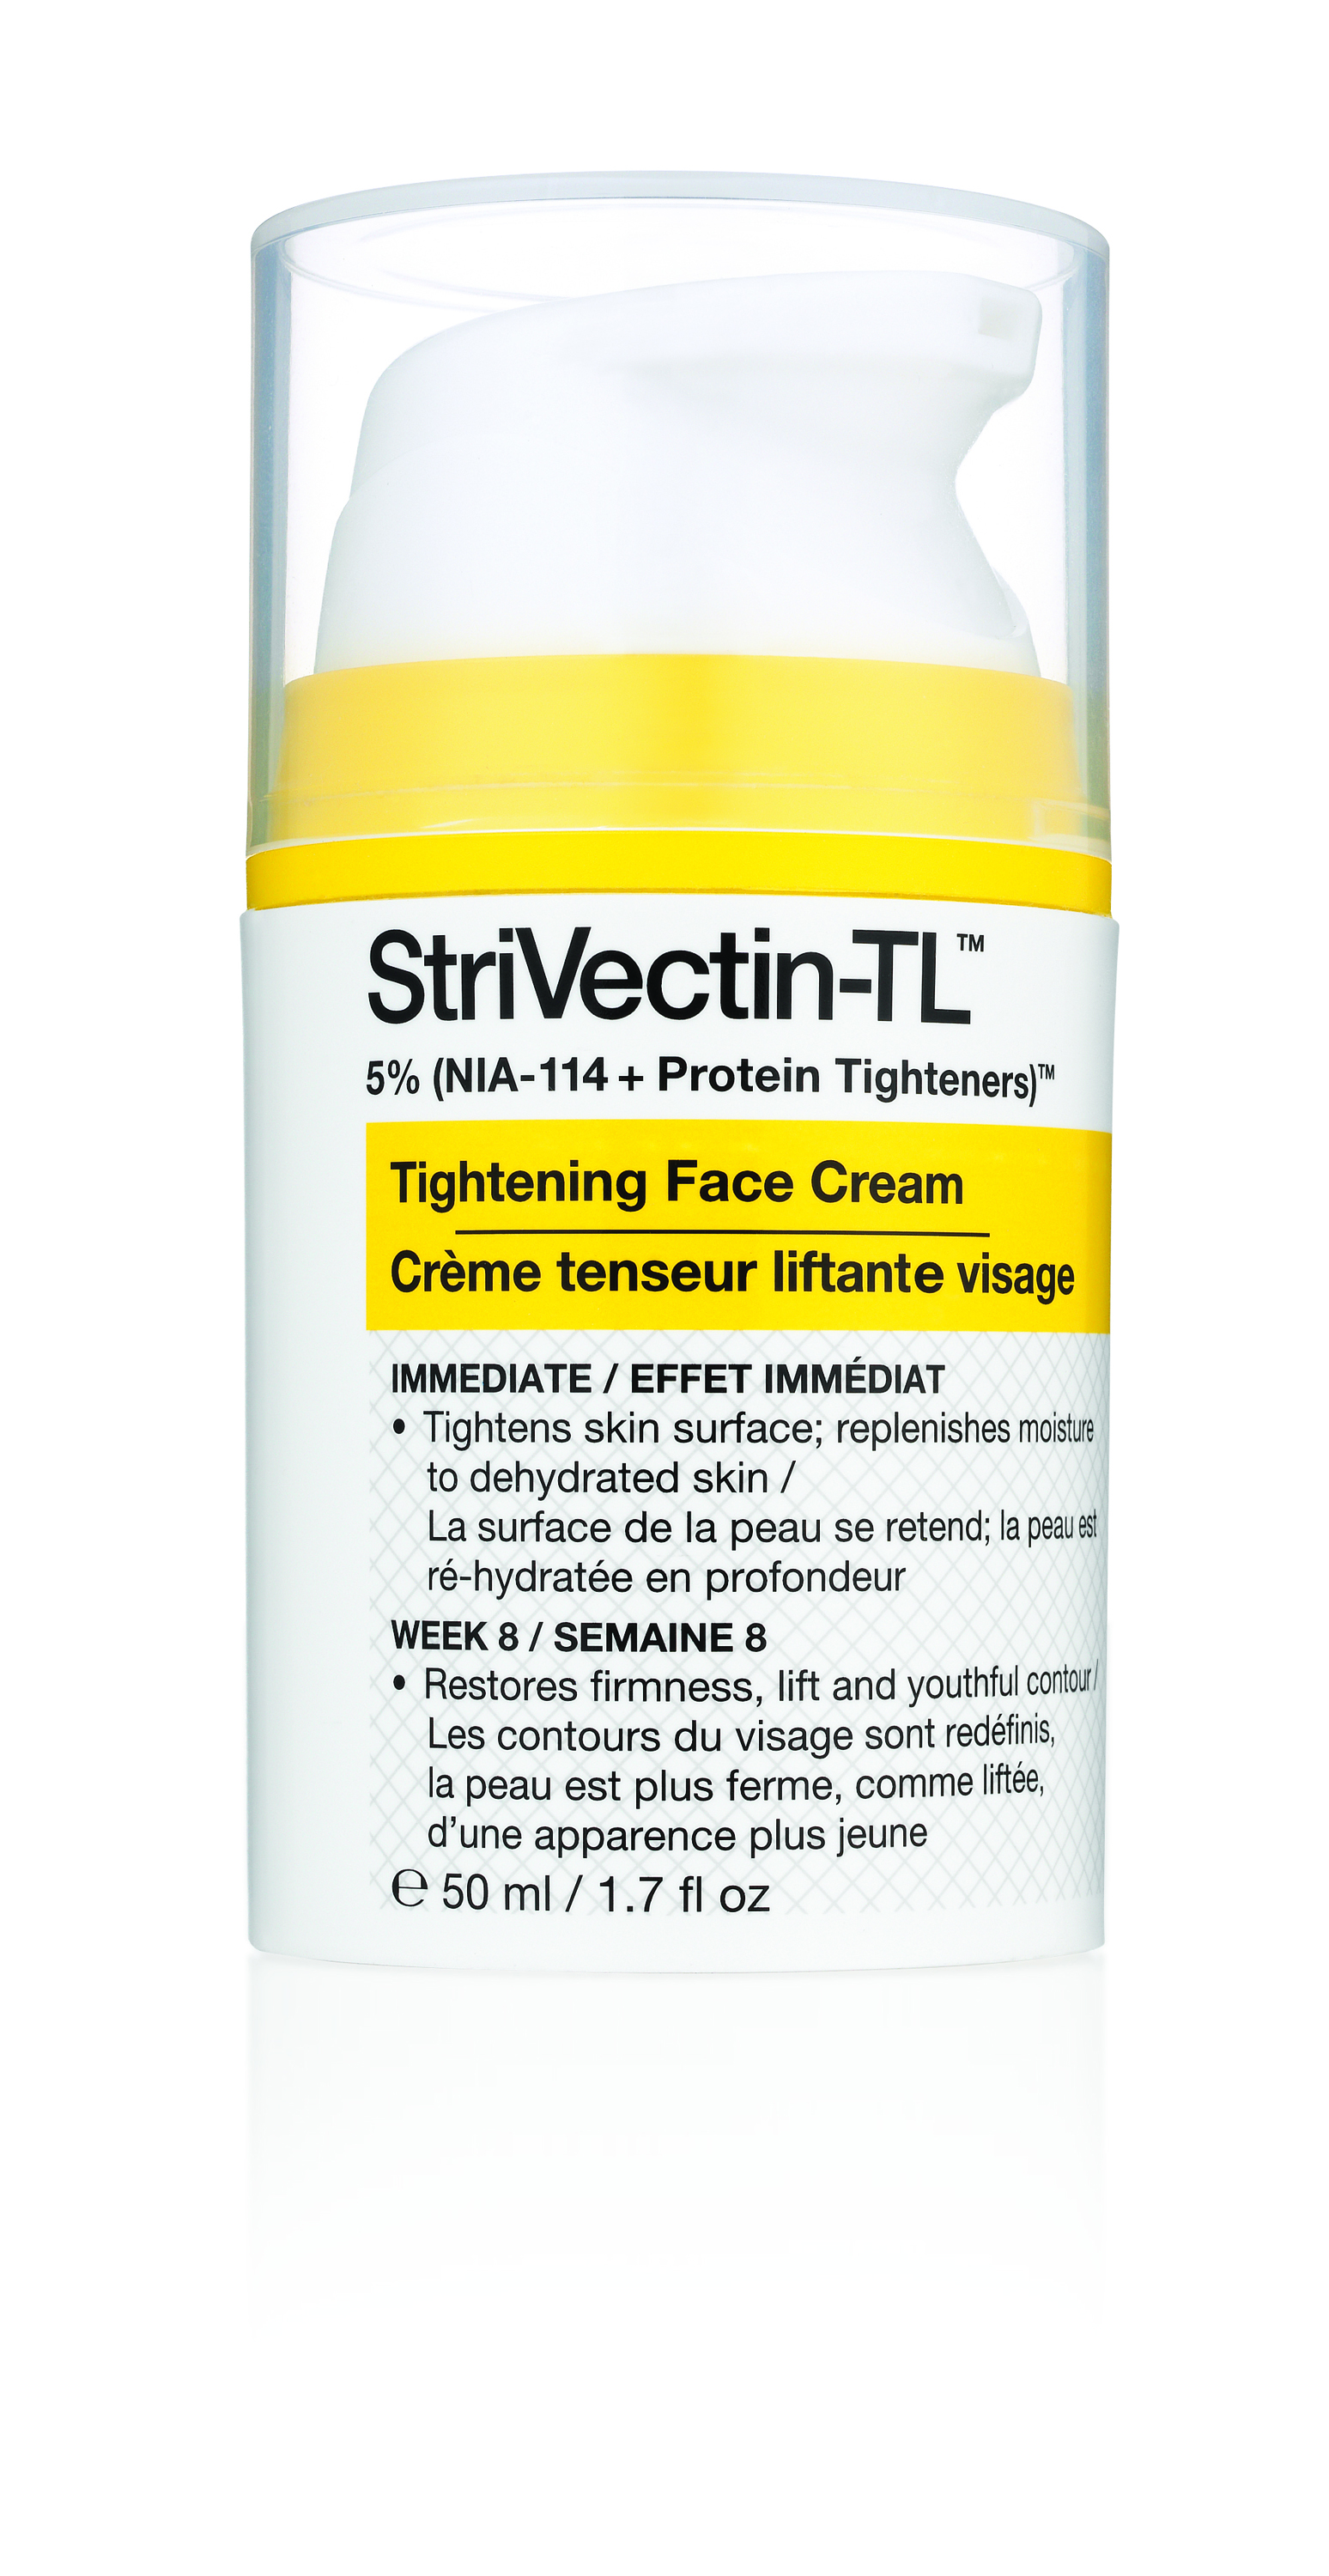 StriVectin-TL Tightening Face Cream